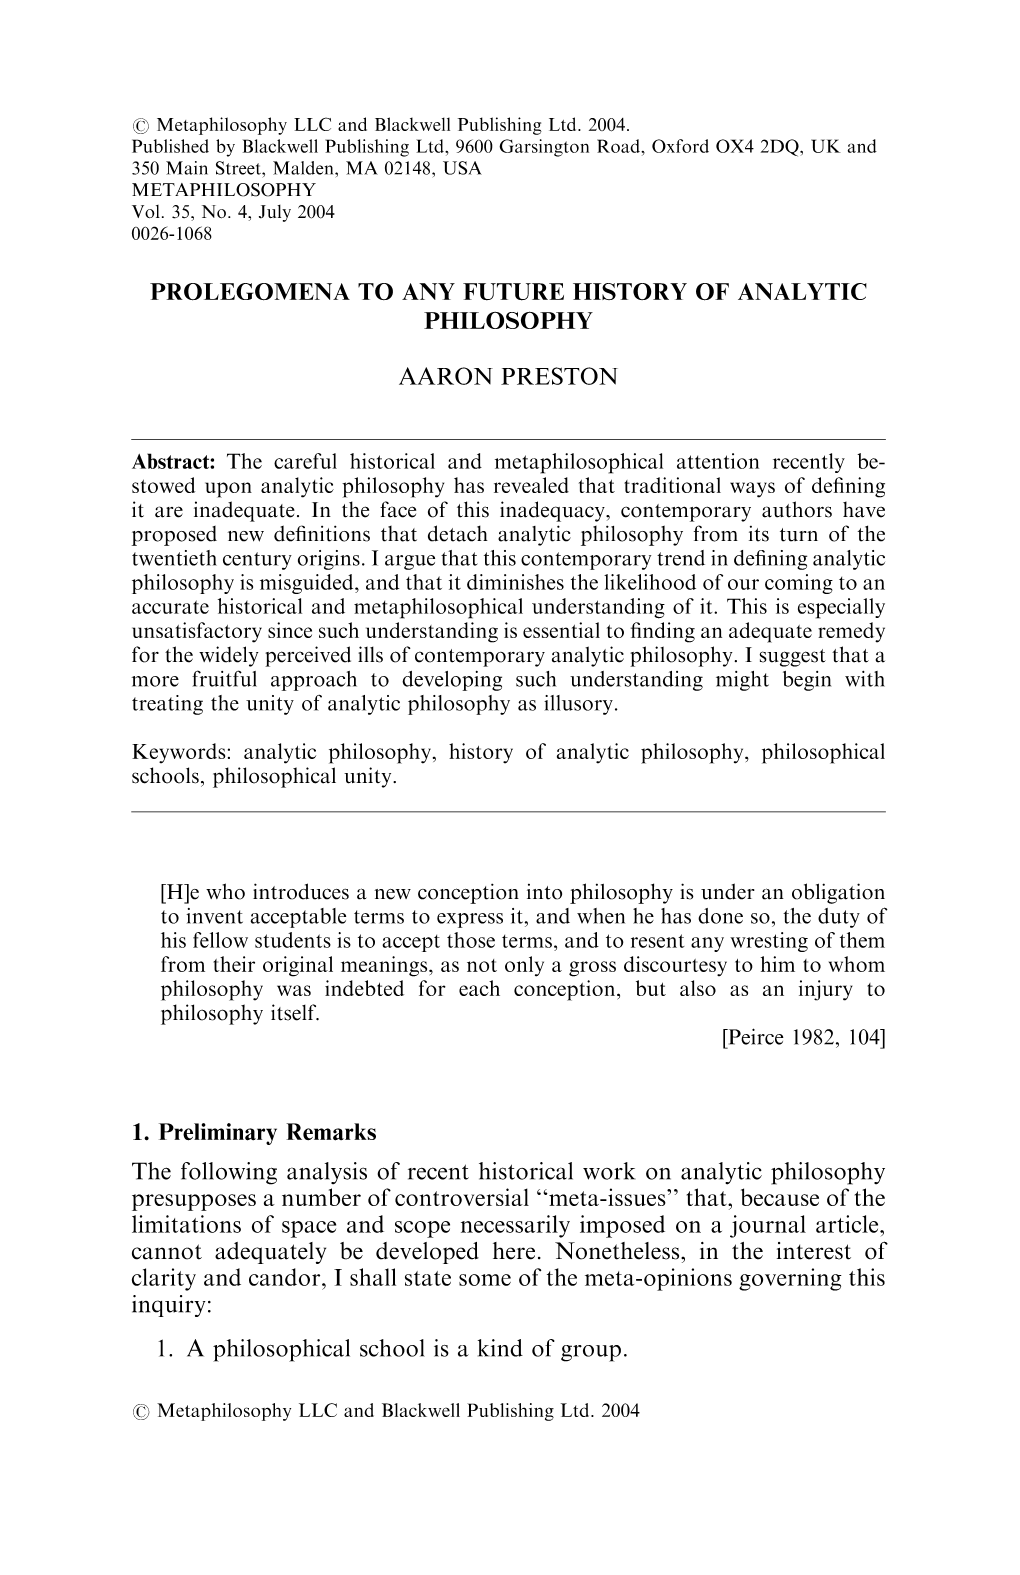 Prolegomena to Any Future History of Analytic Philosophy